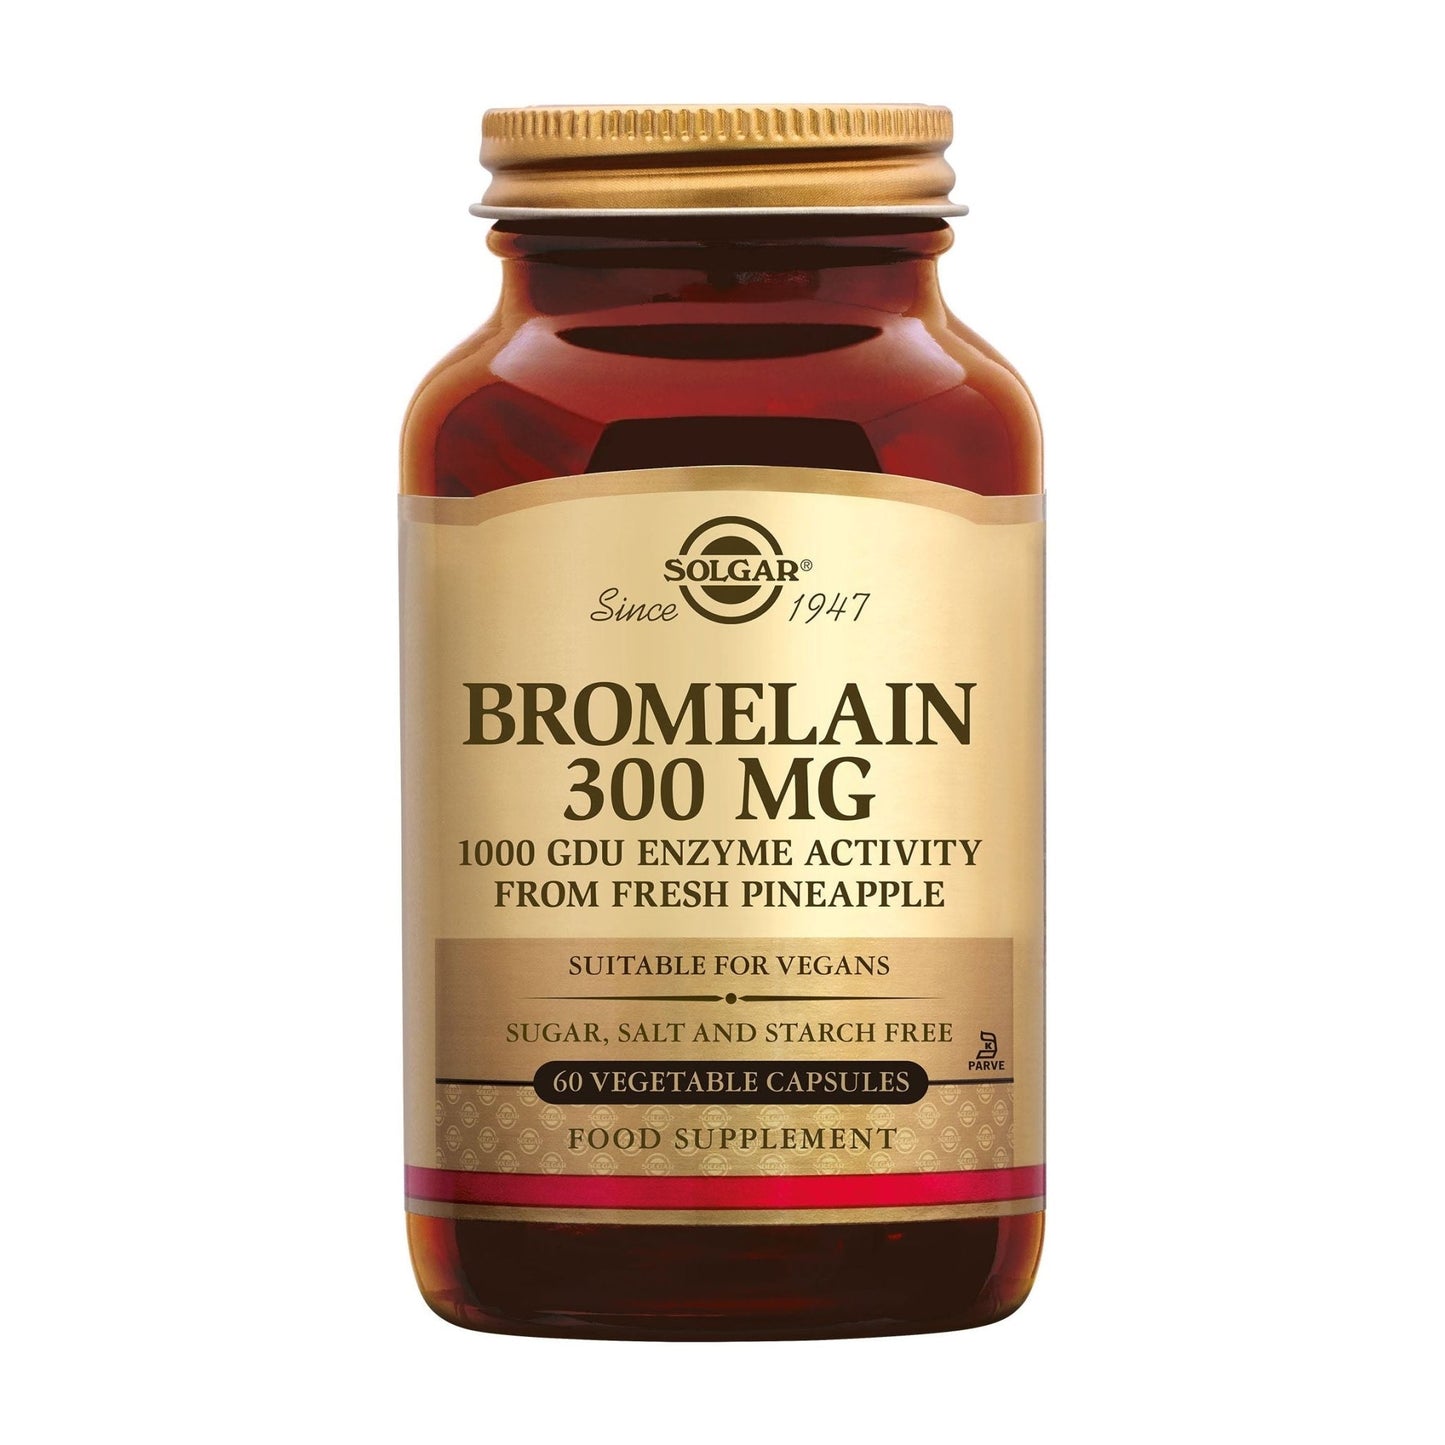 Bromelaine 300 mg Supplement Solgar   